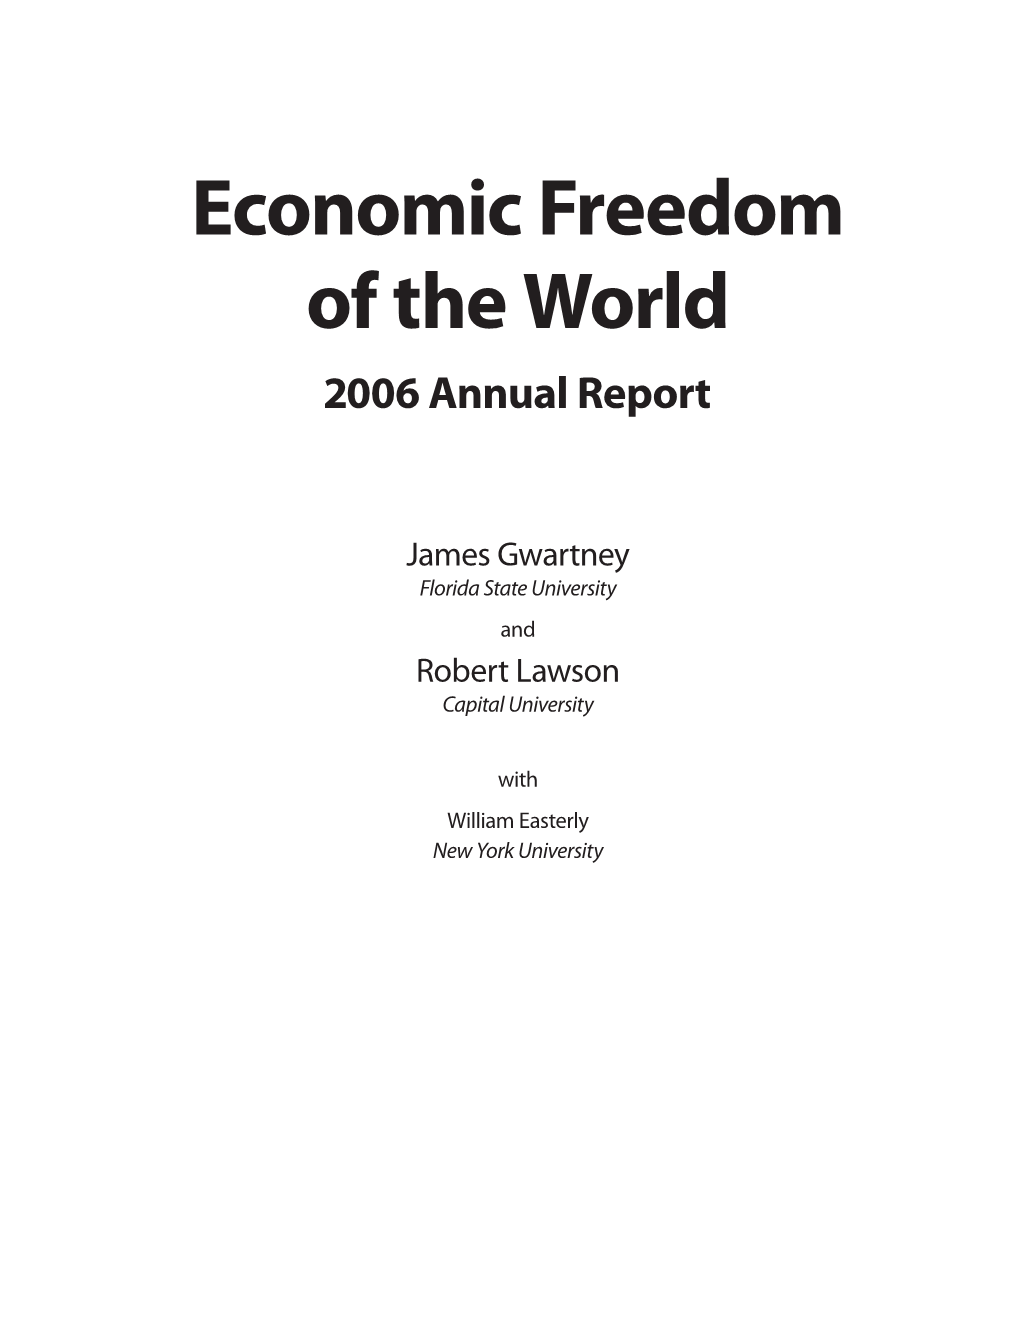 Economic Freedom of the World: 2006 Annual Report Iii